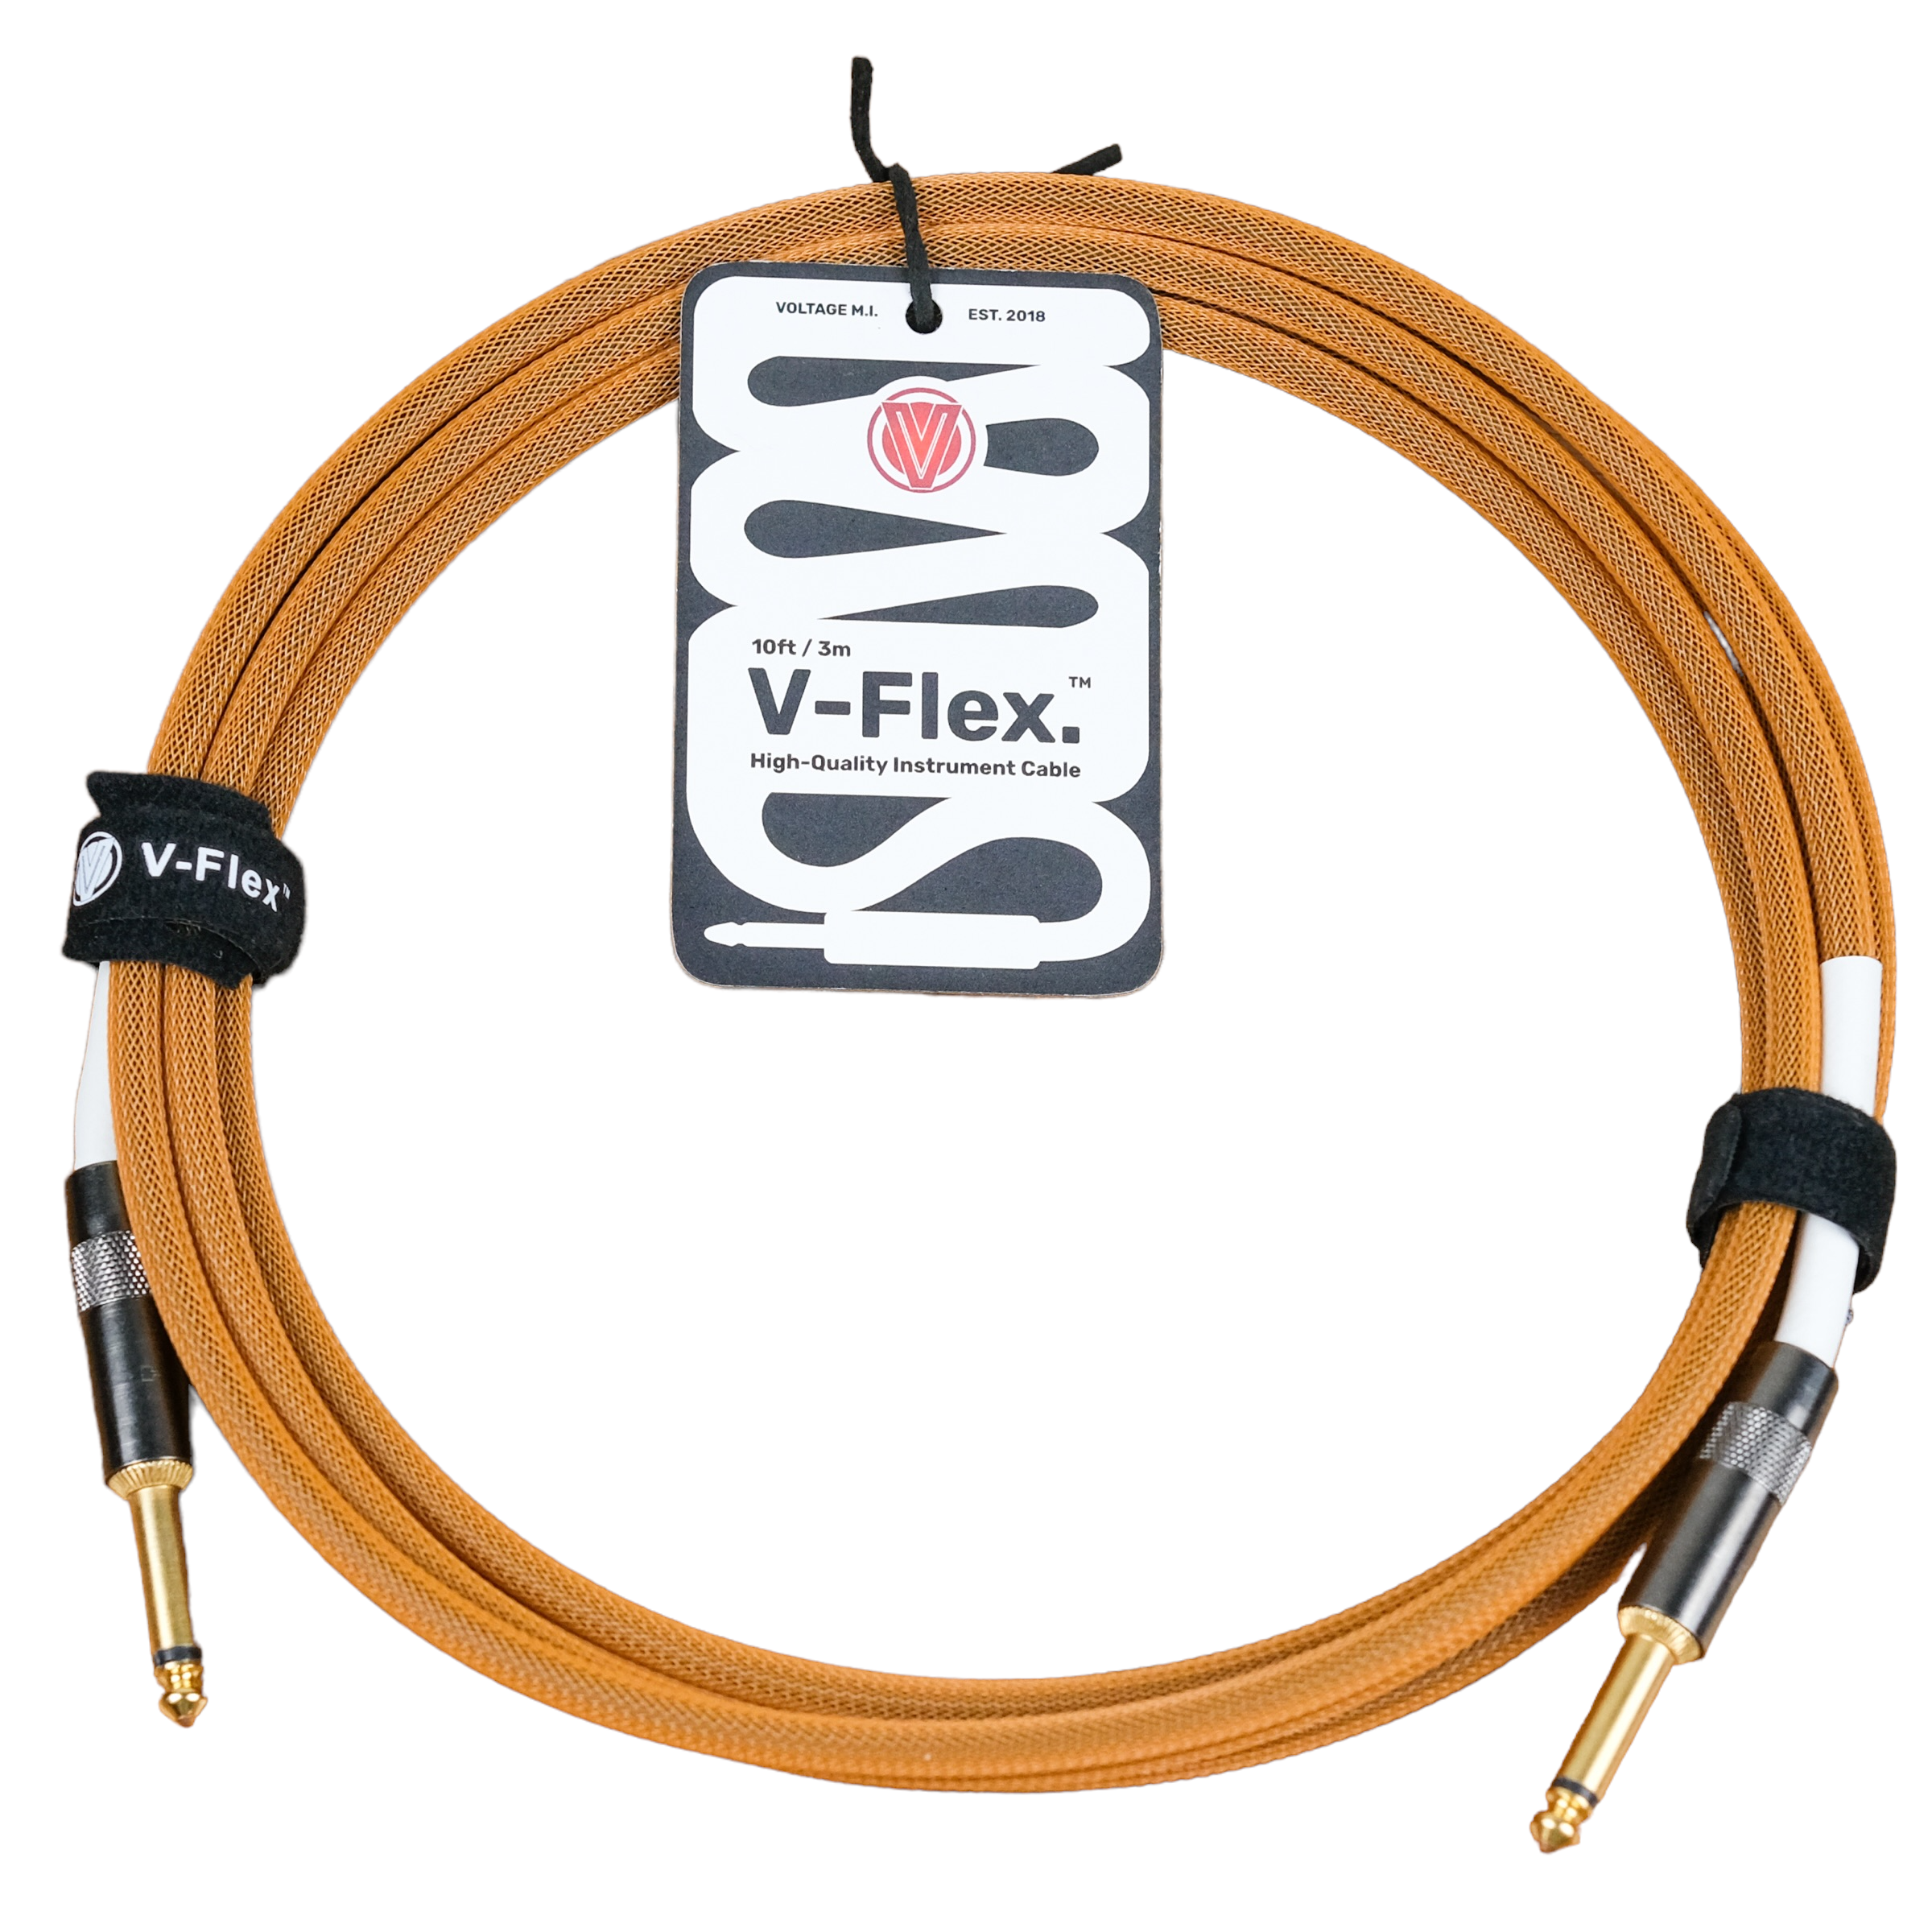 Voltage 10ft V-Flex High Quality Instrument Cable